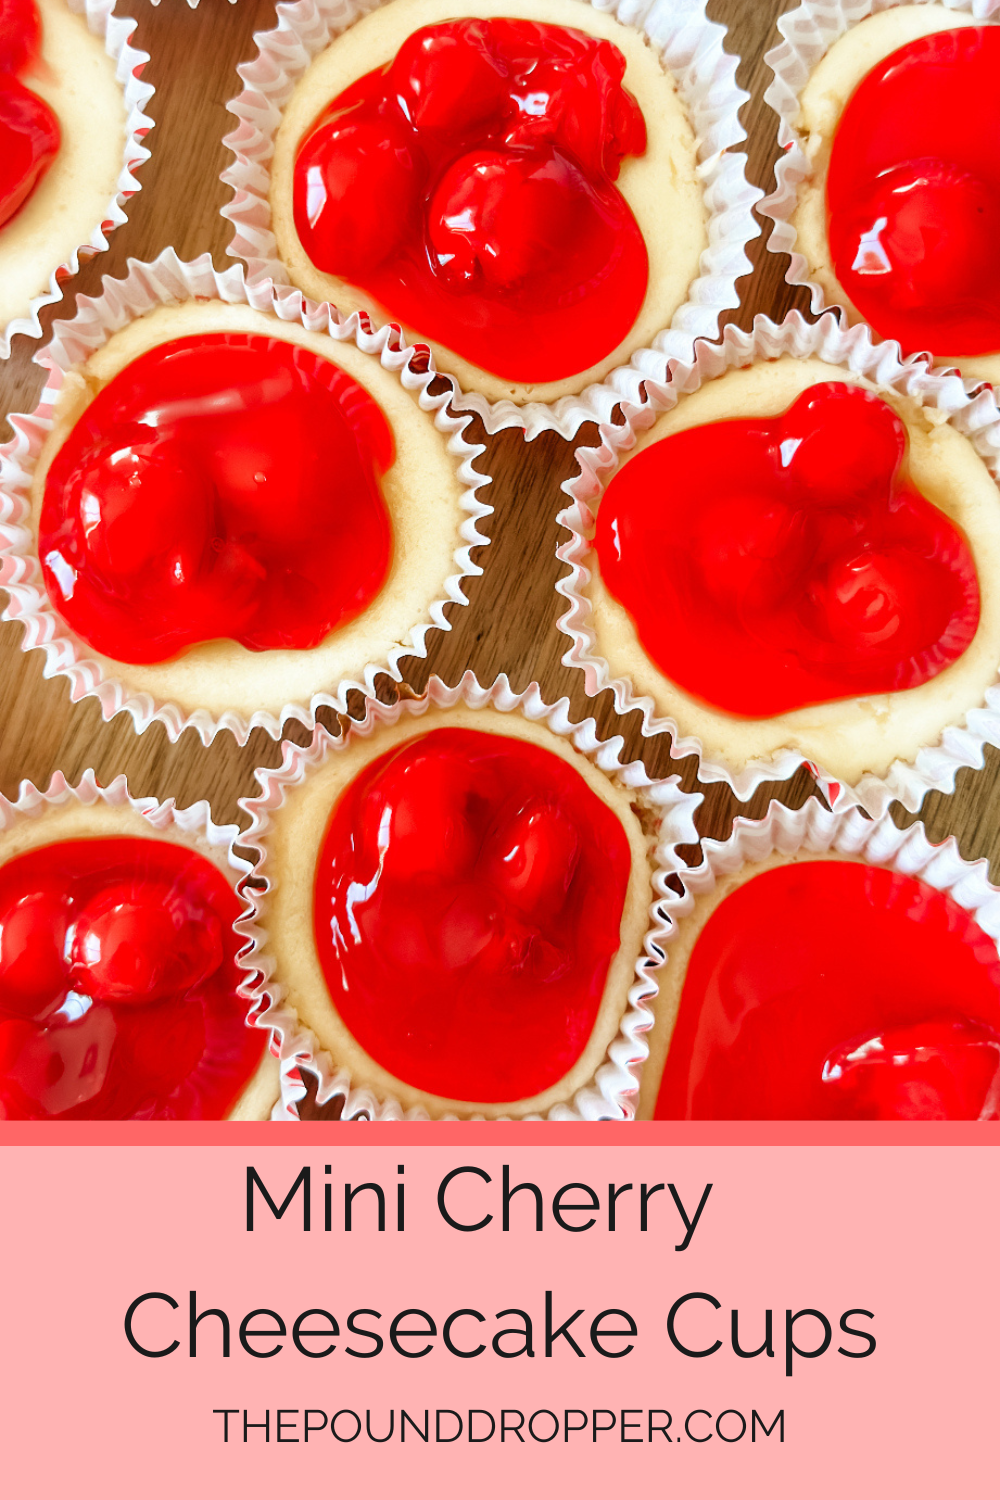 Mini Cherry Cheesecake Cups via @pounddropper